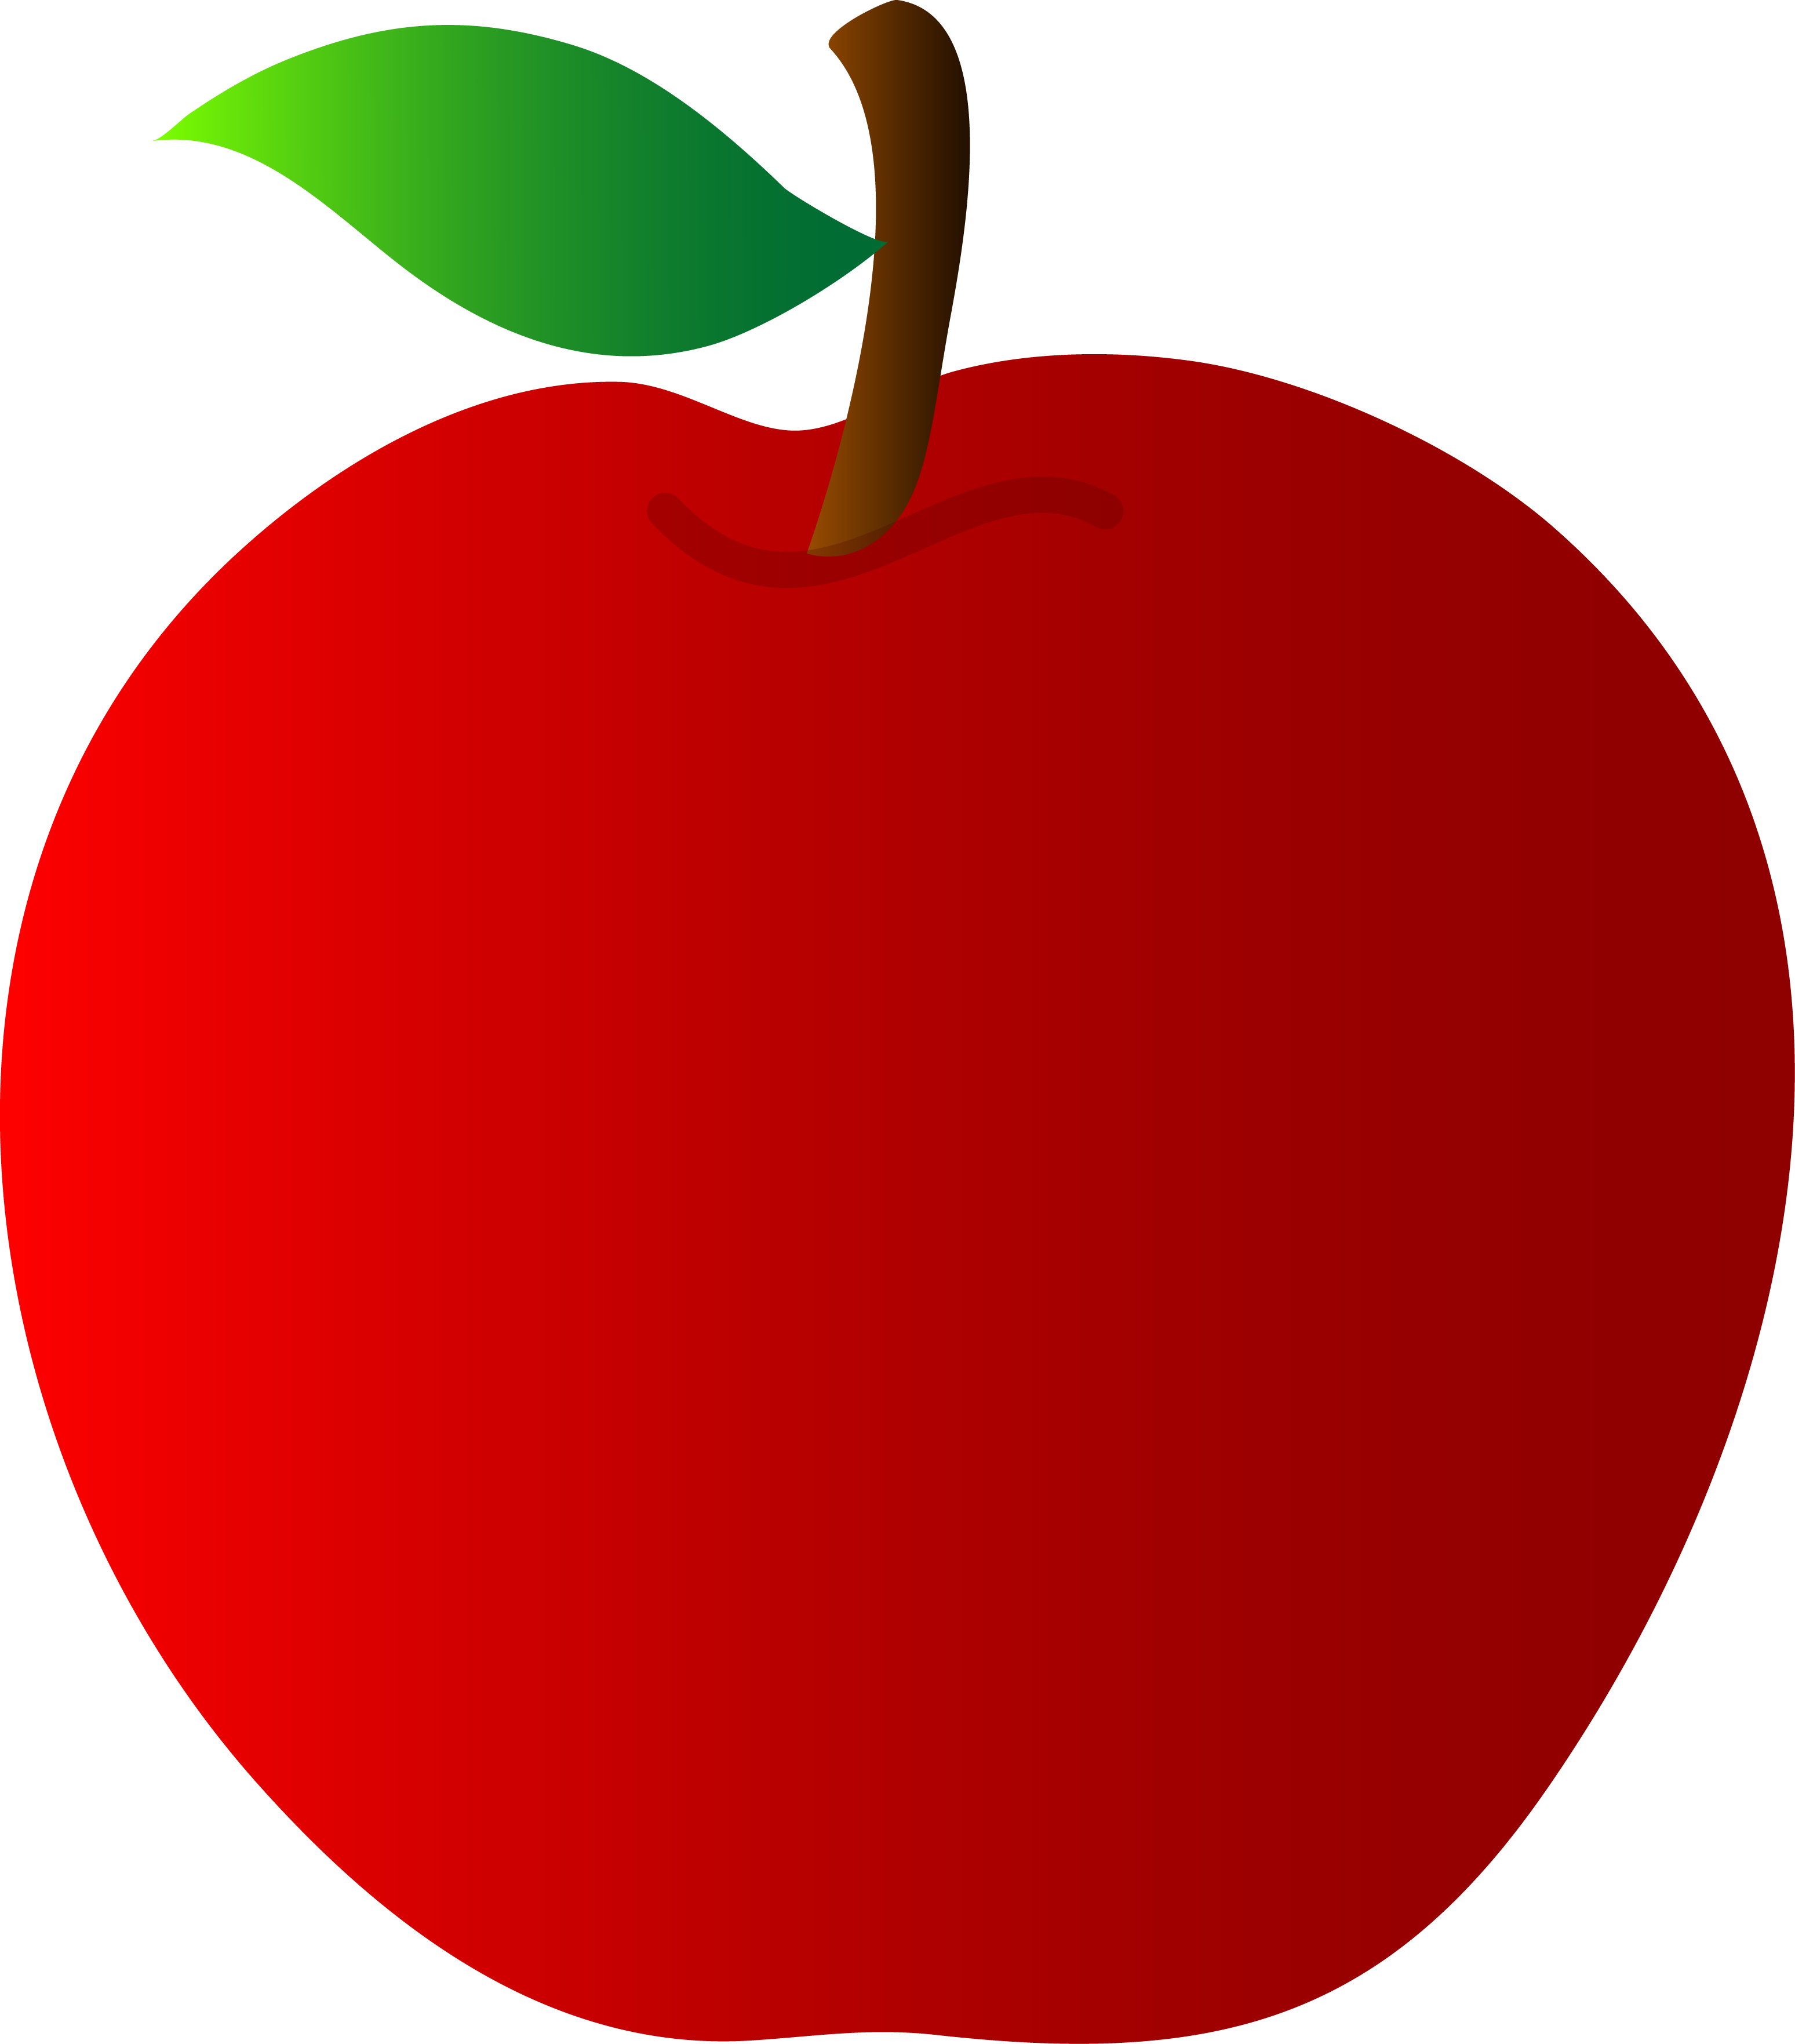 Red Apple Vector Art - Free Clip Art